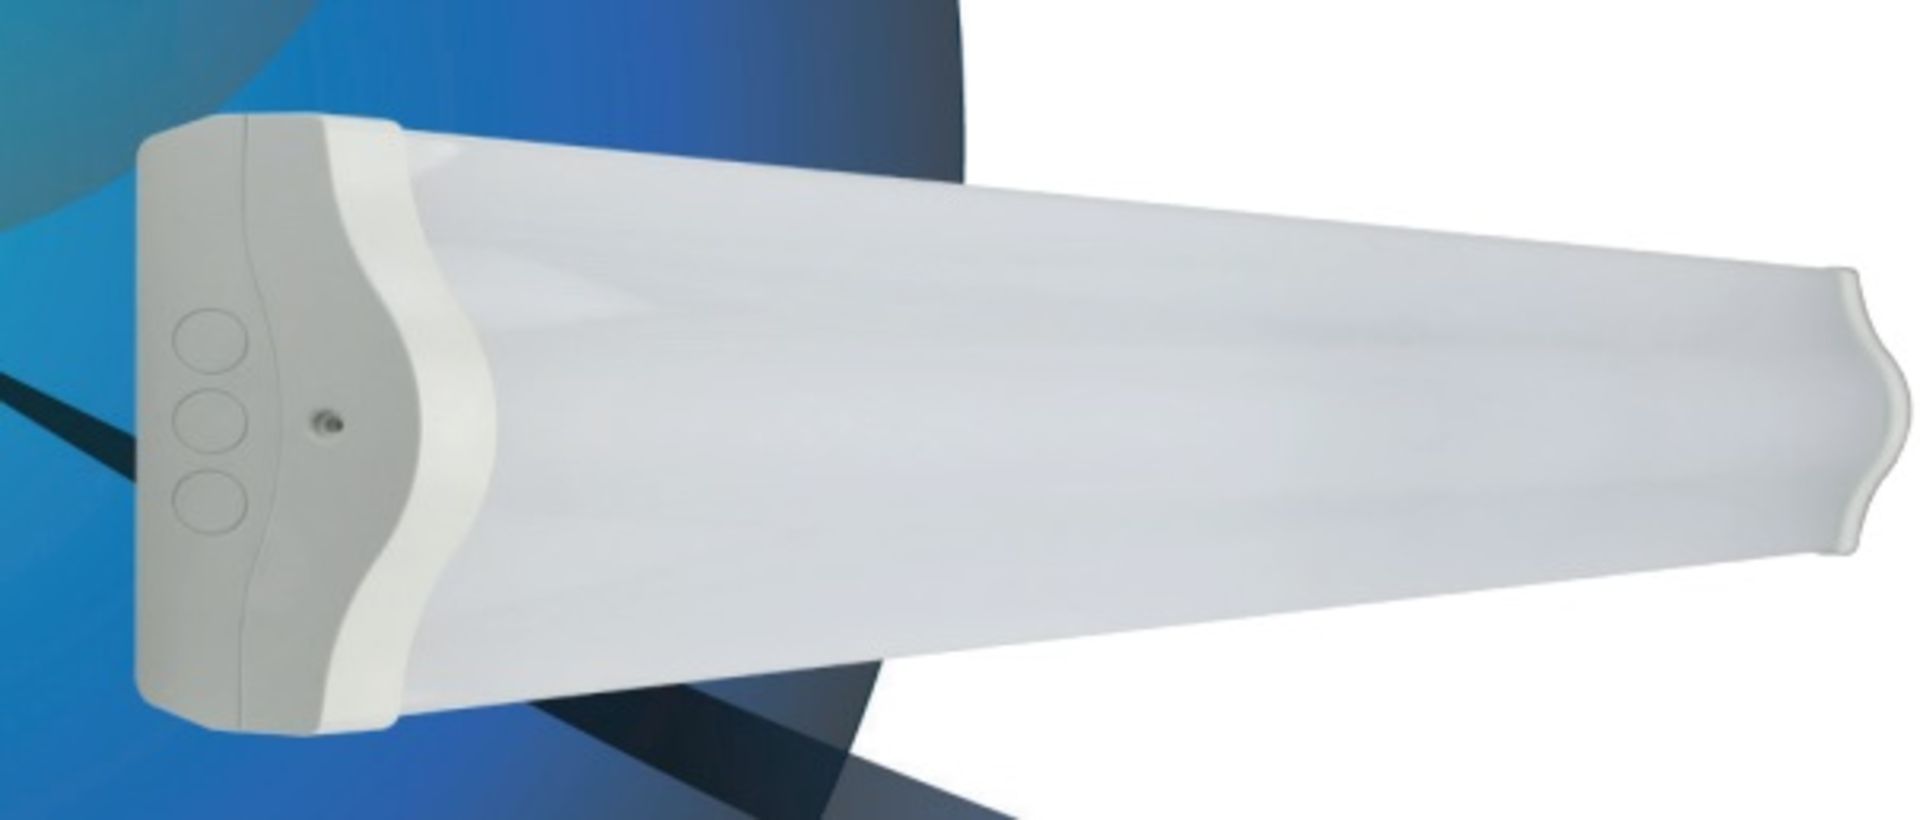 40 x Scholar Luminaire 5ft LED Lights | SCH40/840 | Total Cost £724